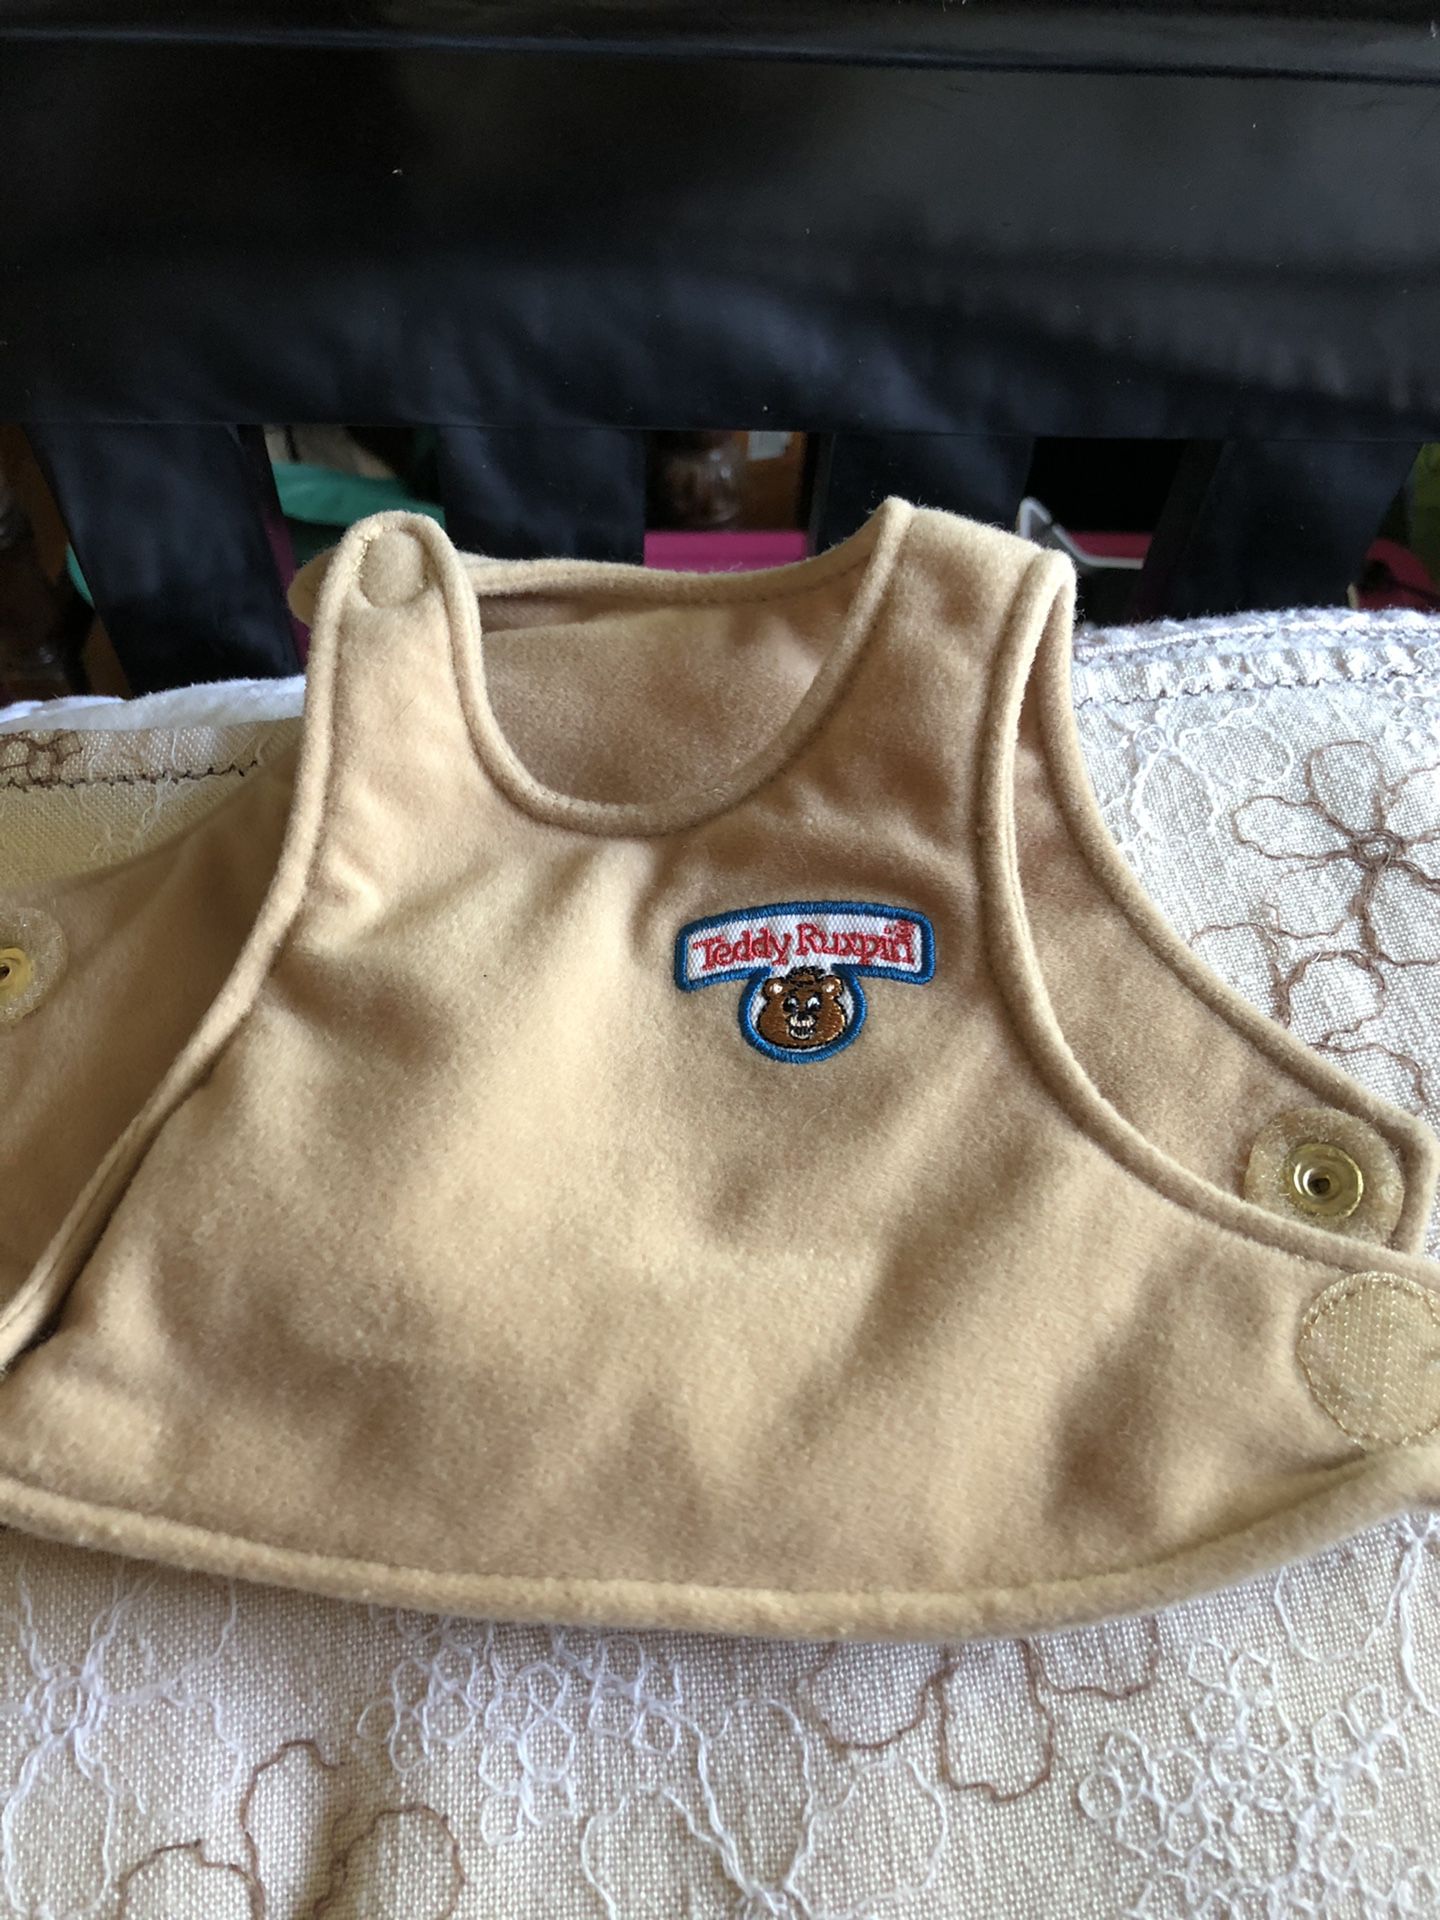 Vintage Teddy Ruxpin vest